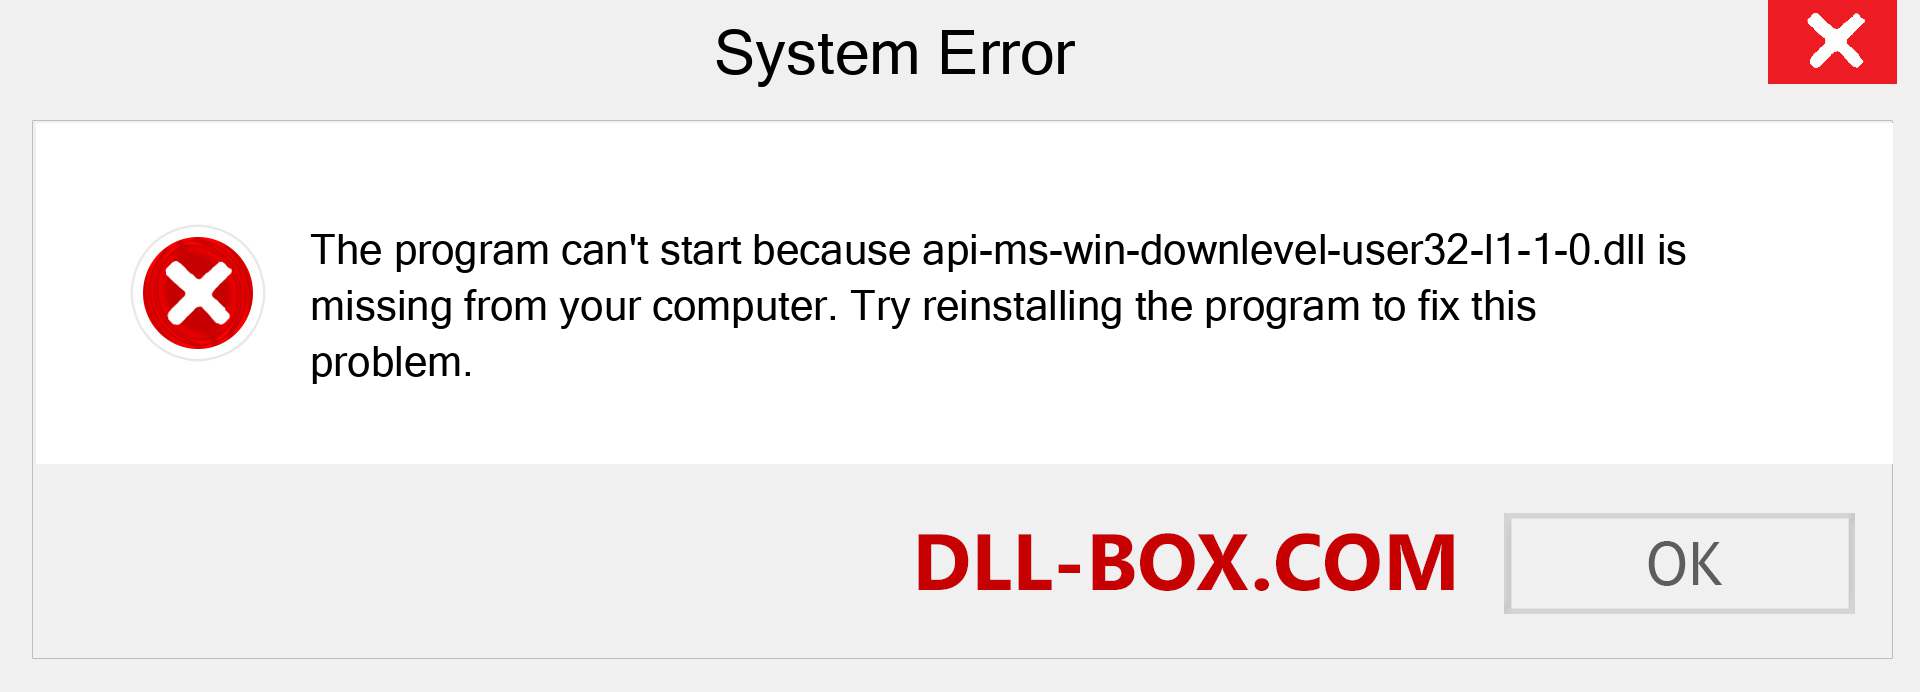  api-ms-win-downlevel-user32-l1-1-0.dll file is missing?. Download for Windows 7, 8, 10 - Fix  api-ms-win-downlevel-user32-l1-1-0 dll Missing Error on Windows, photos, images